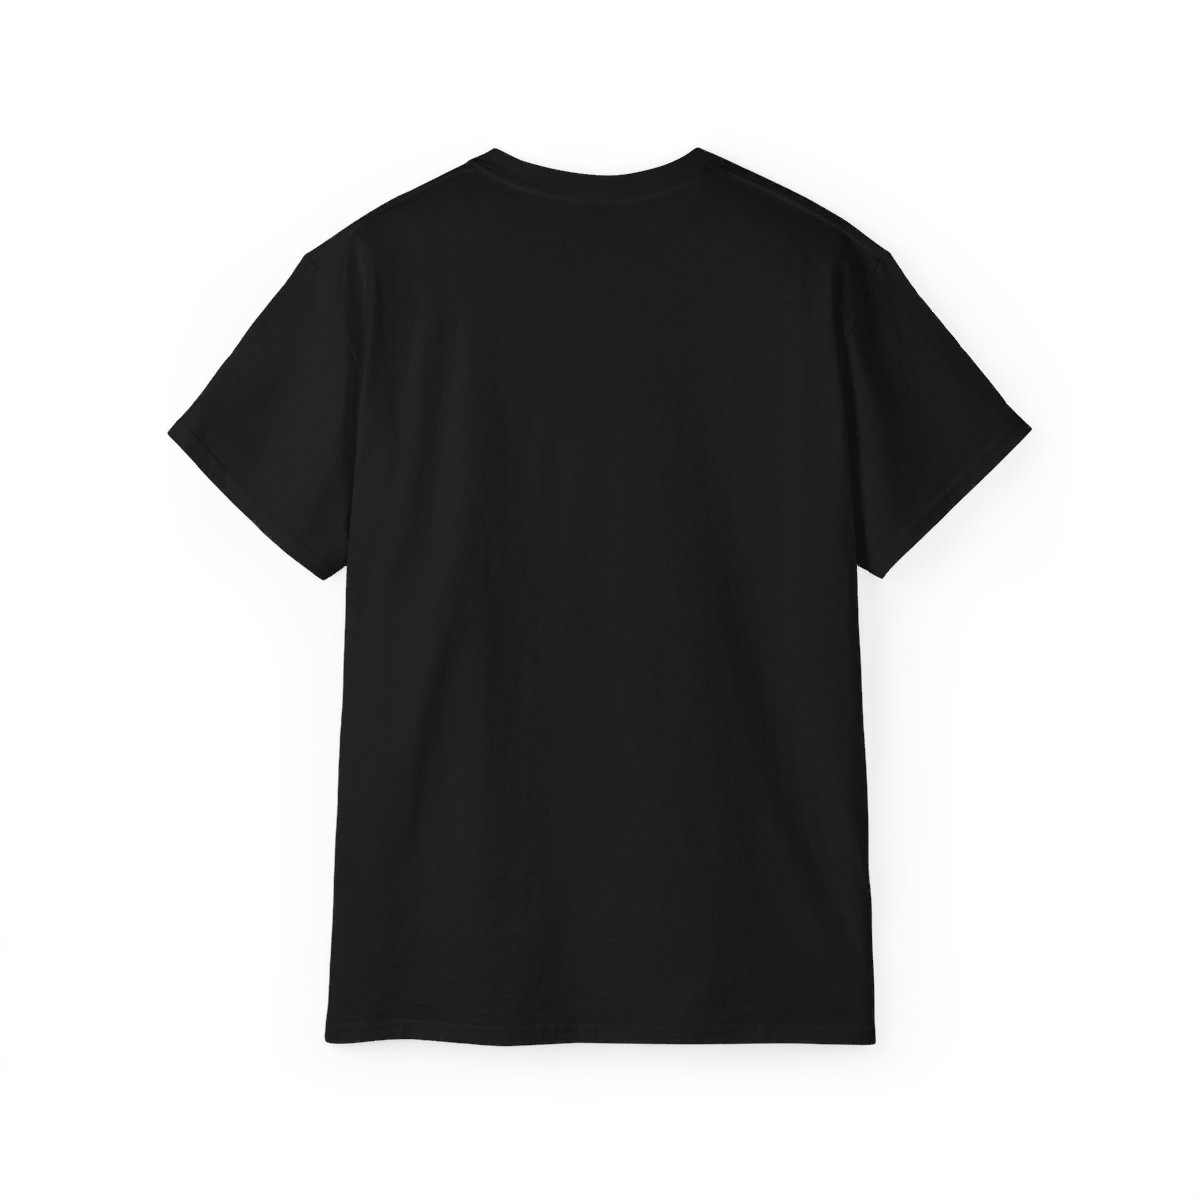 BAROLO BOYS - T-Shirt product thumbnail image